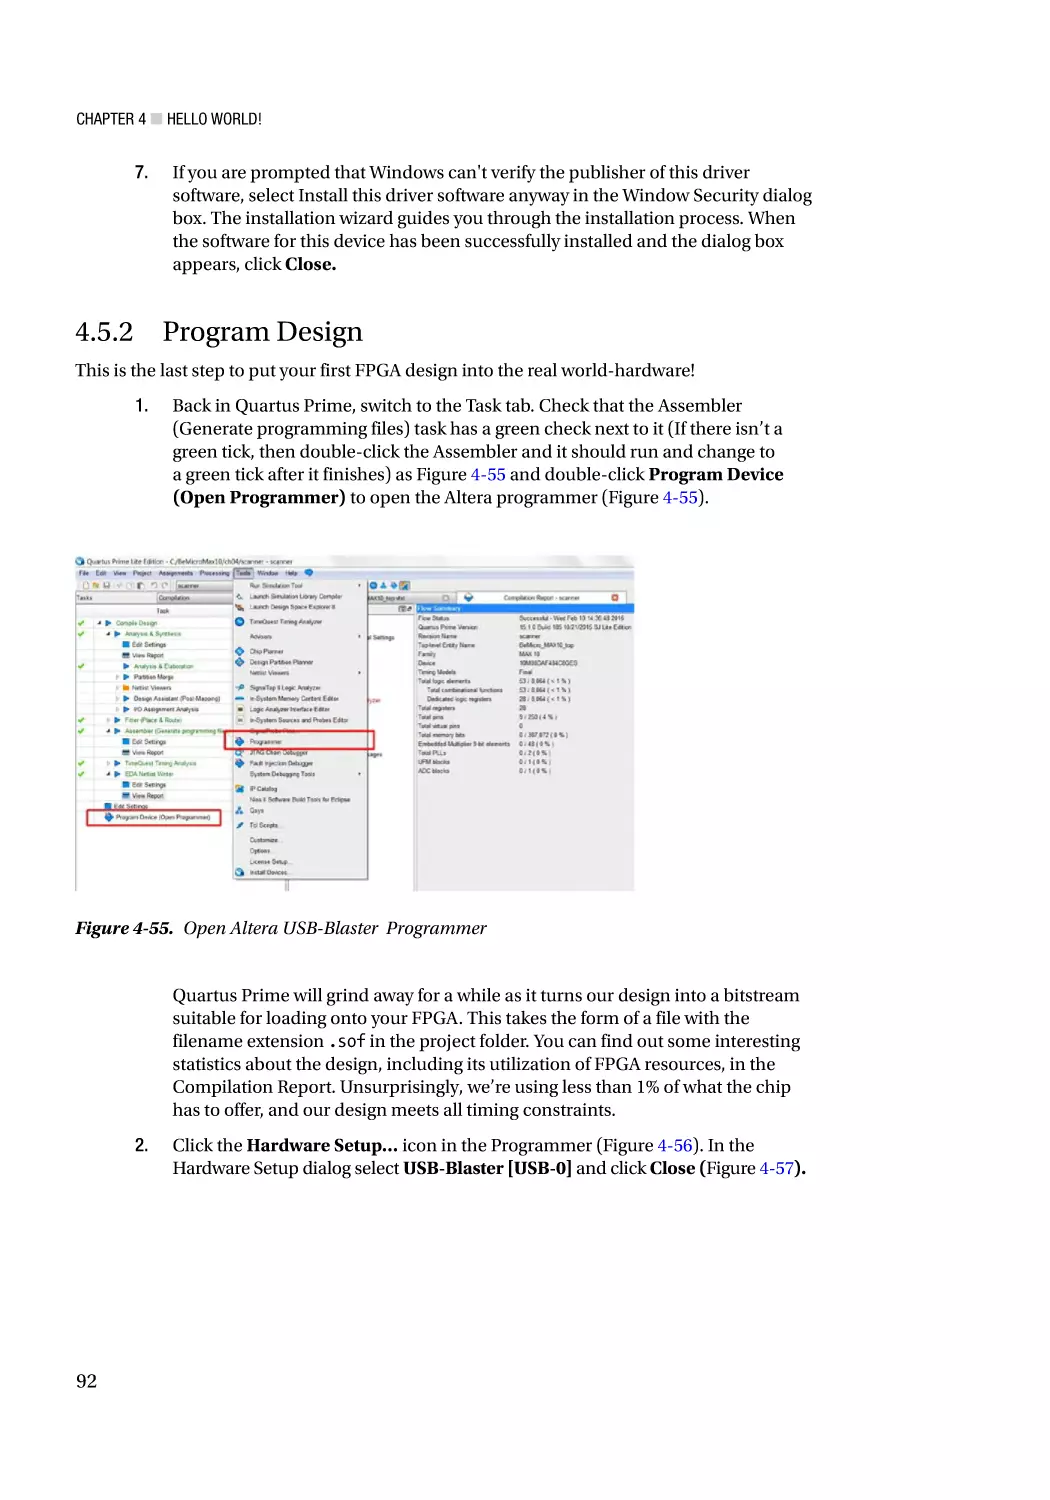 4.5.2 Program Design